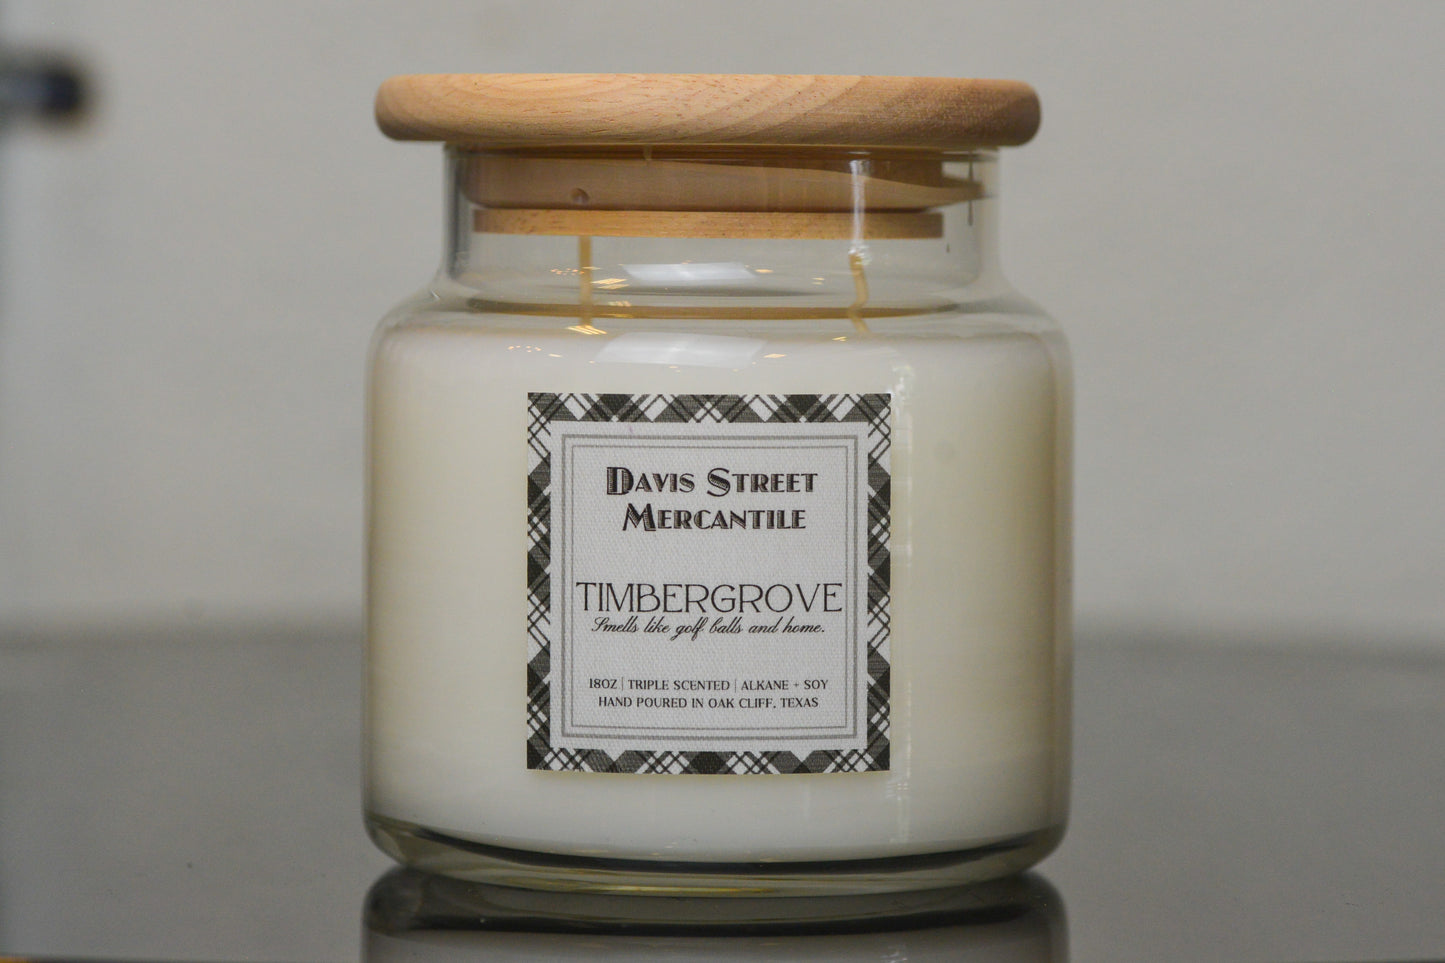 Timbergrove Candle